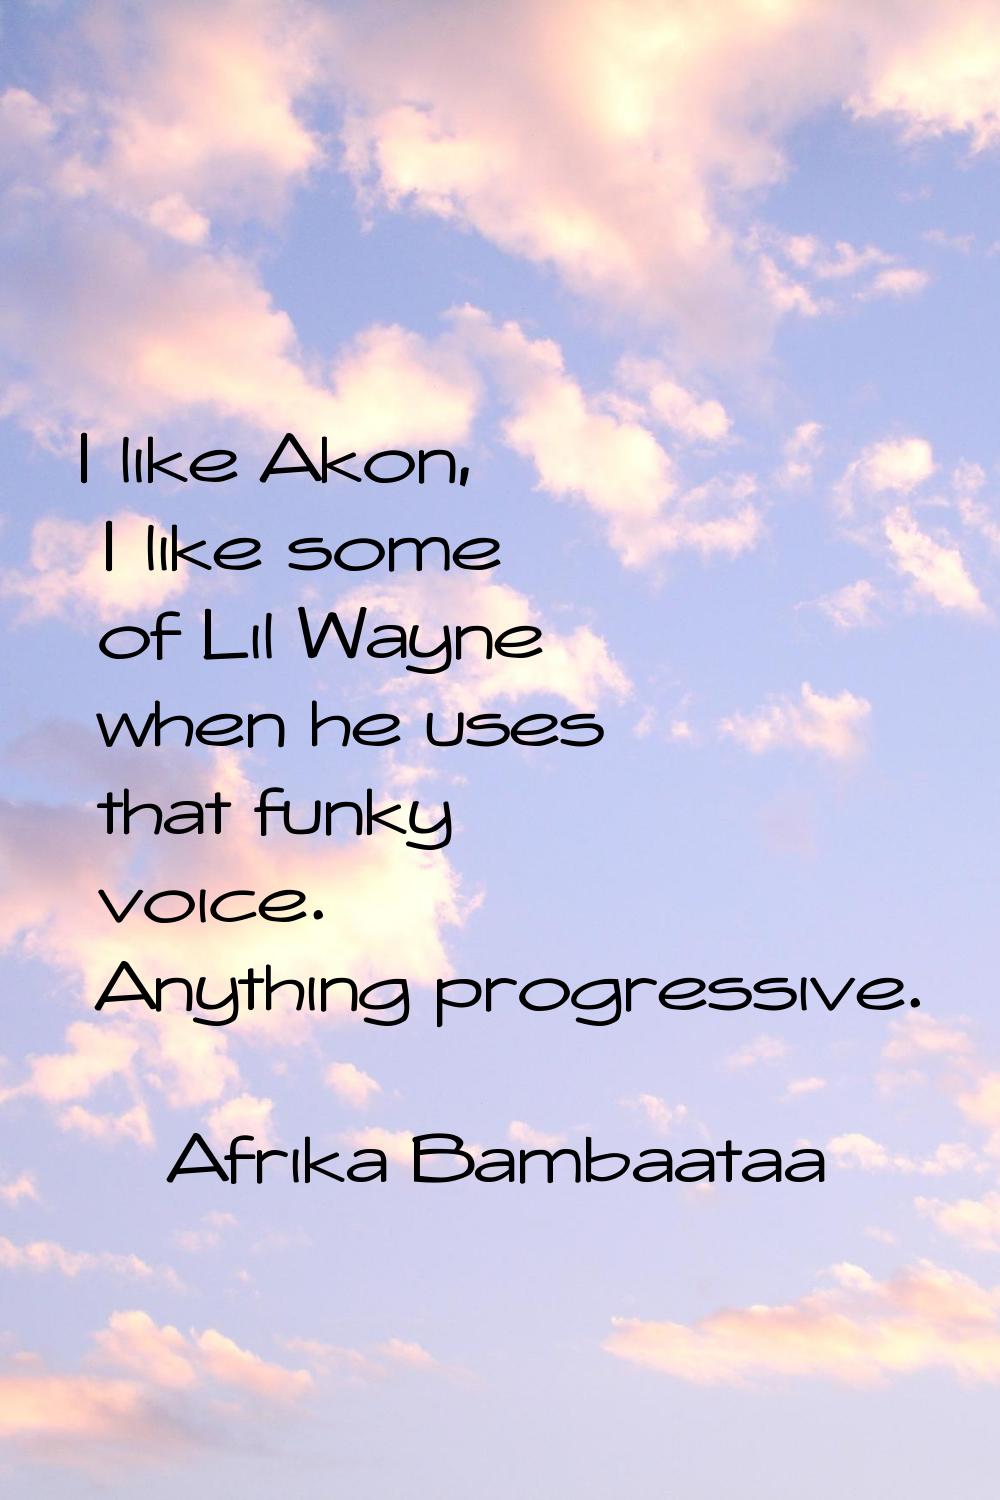 I like Akon, I like some of Lil Wayne when he uses that funky voice. Anything progressive.